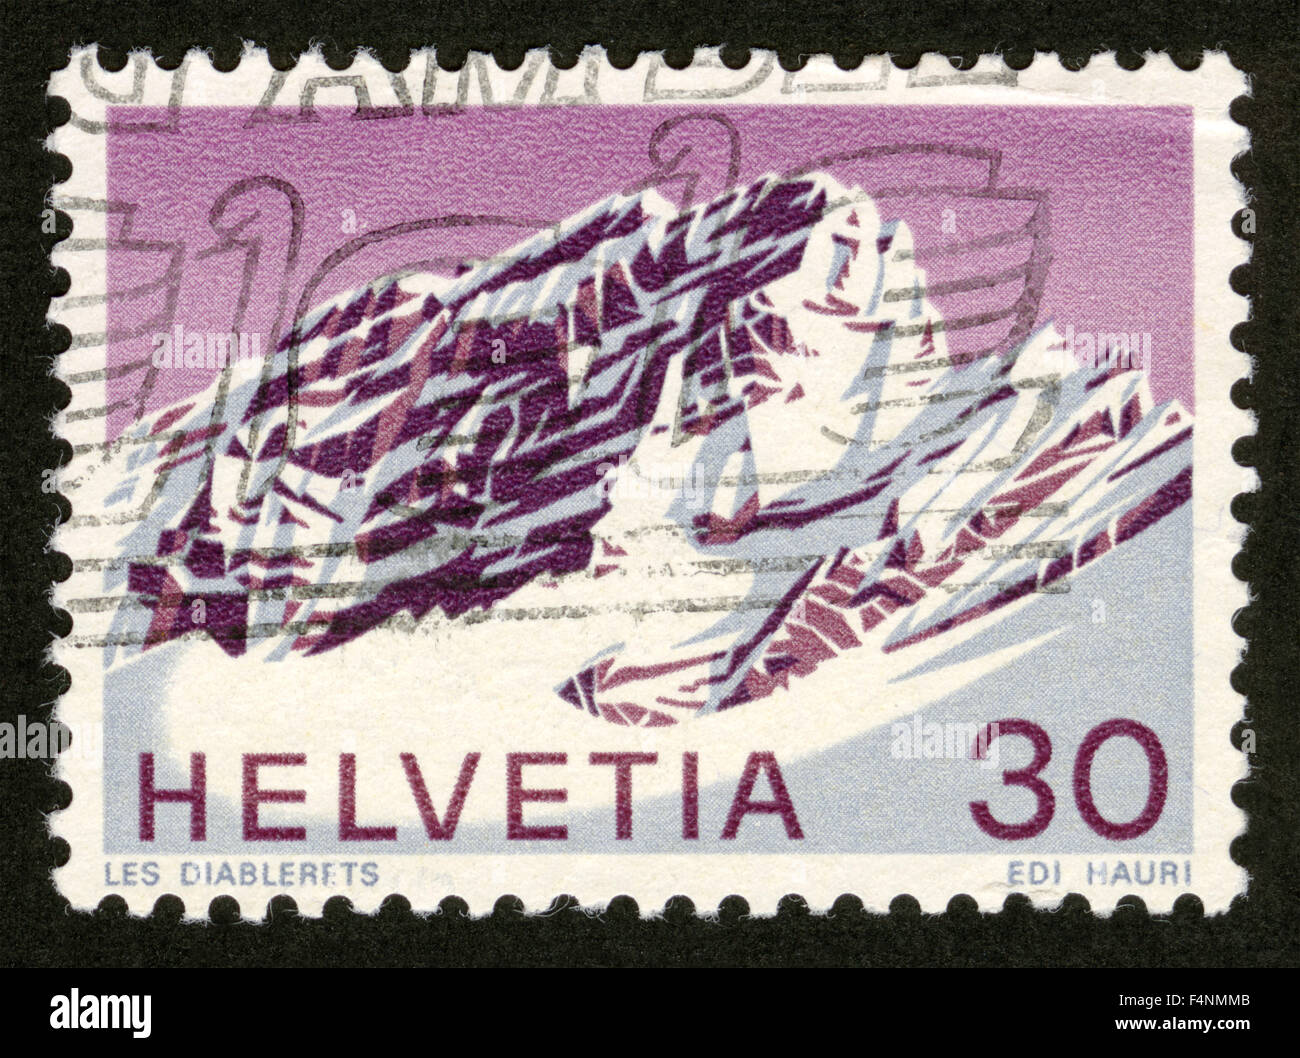 La Svizzera, Helvetia, francobollo, post mark, timbro timbro postale, Alpi mountain, montagne Foto Stock